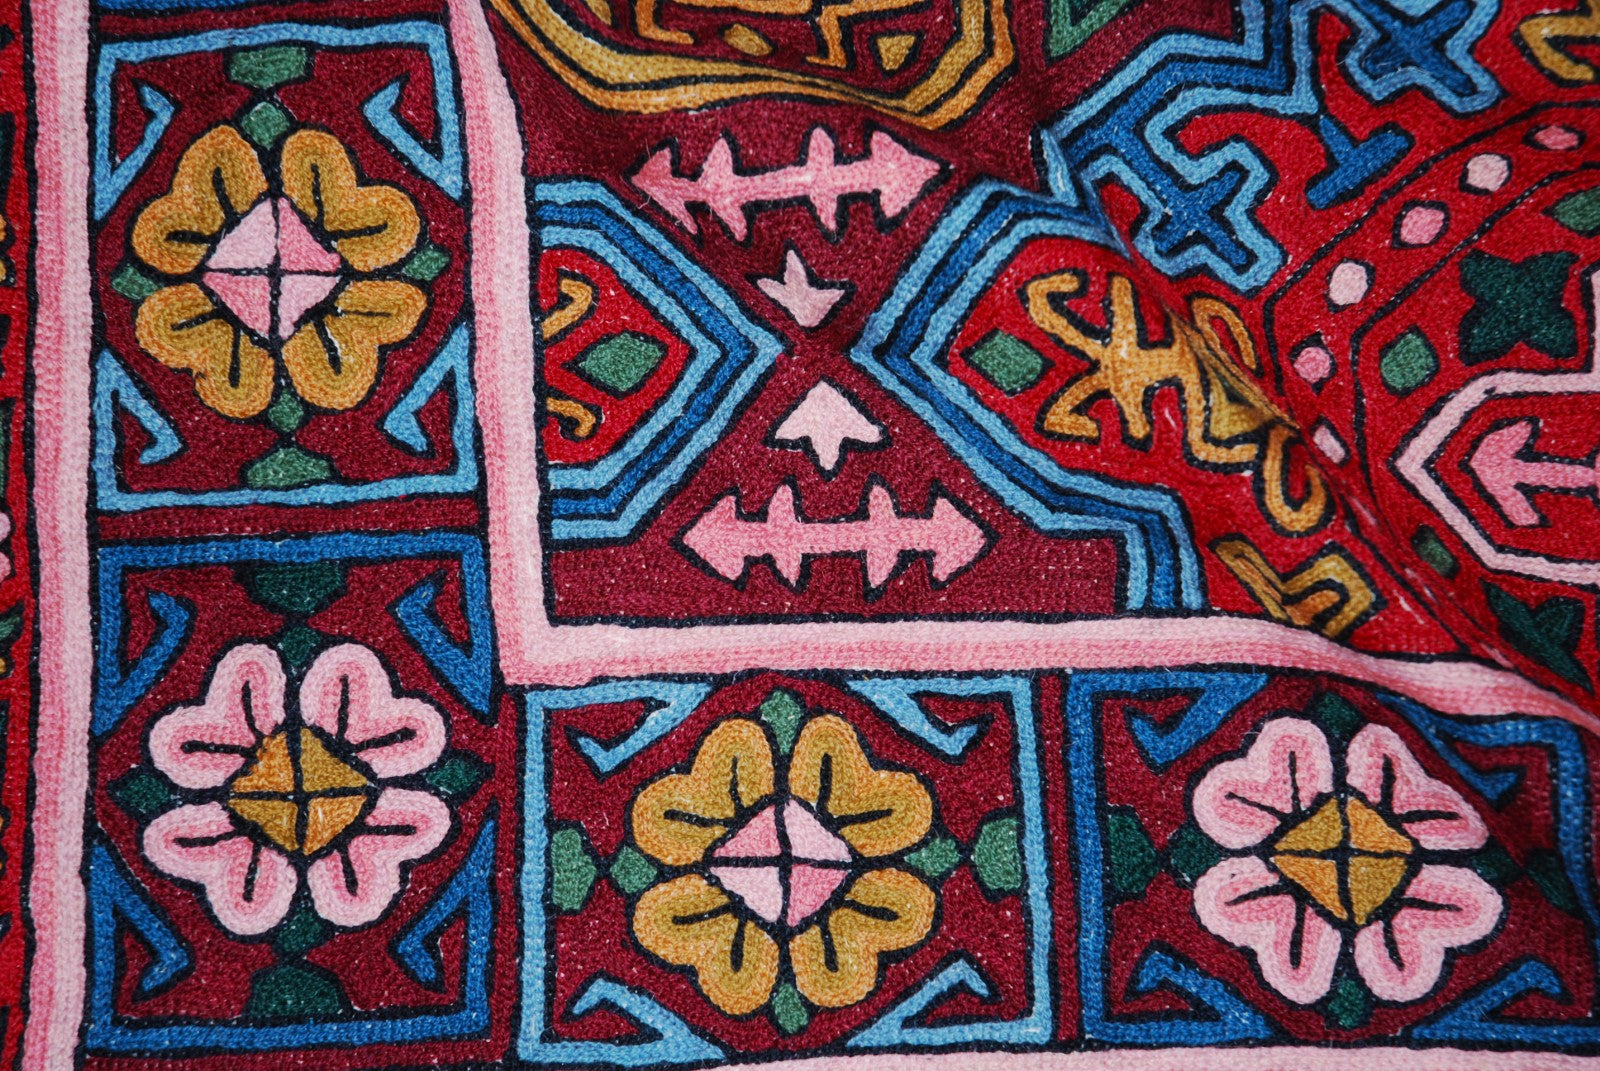 Kashmir Wool Tapestry Kilim Area Rug, Multicolor Wool Embroidery 9x12 feet #CWR108102